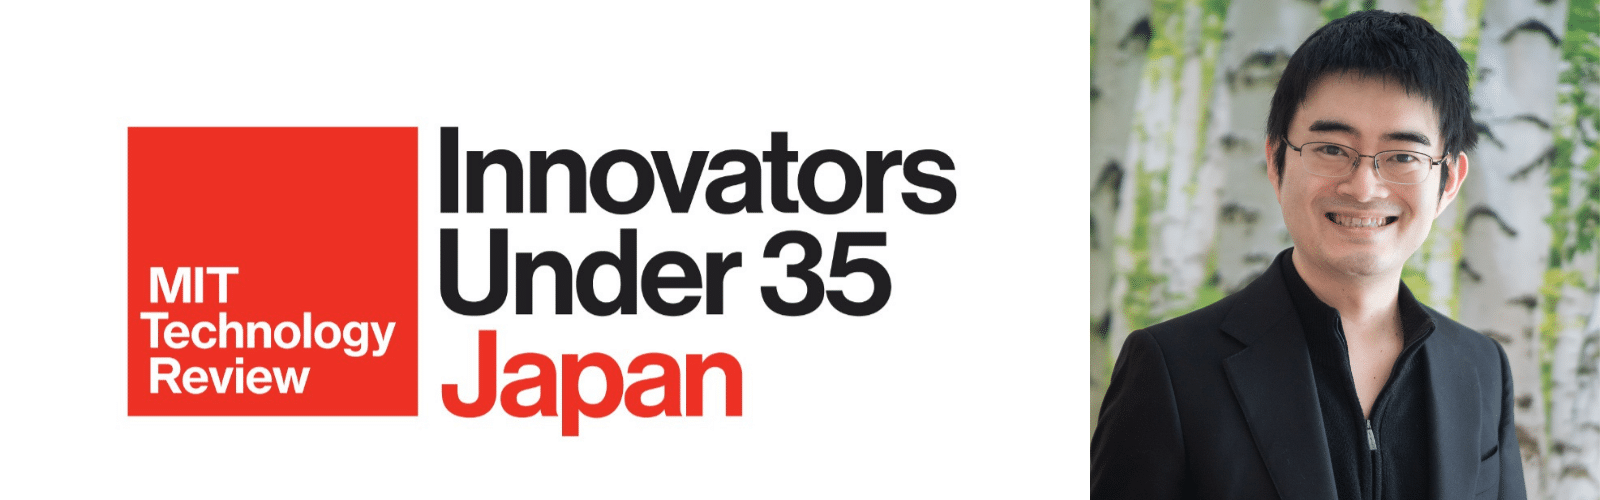 Innovators Under 35 Japan